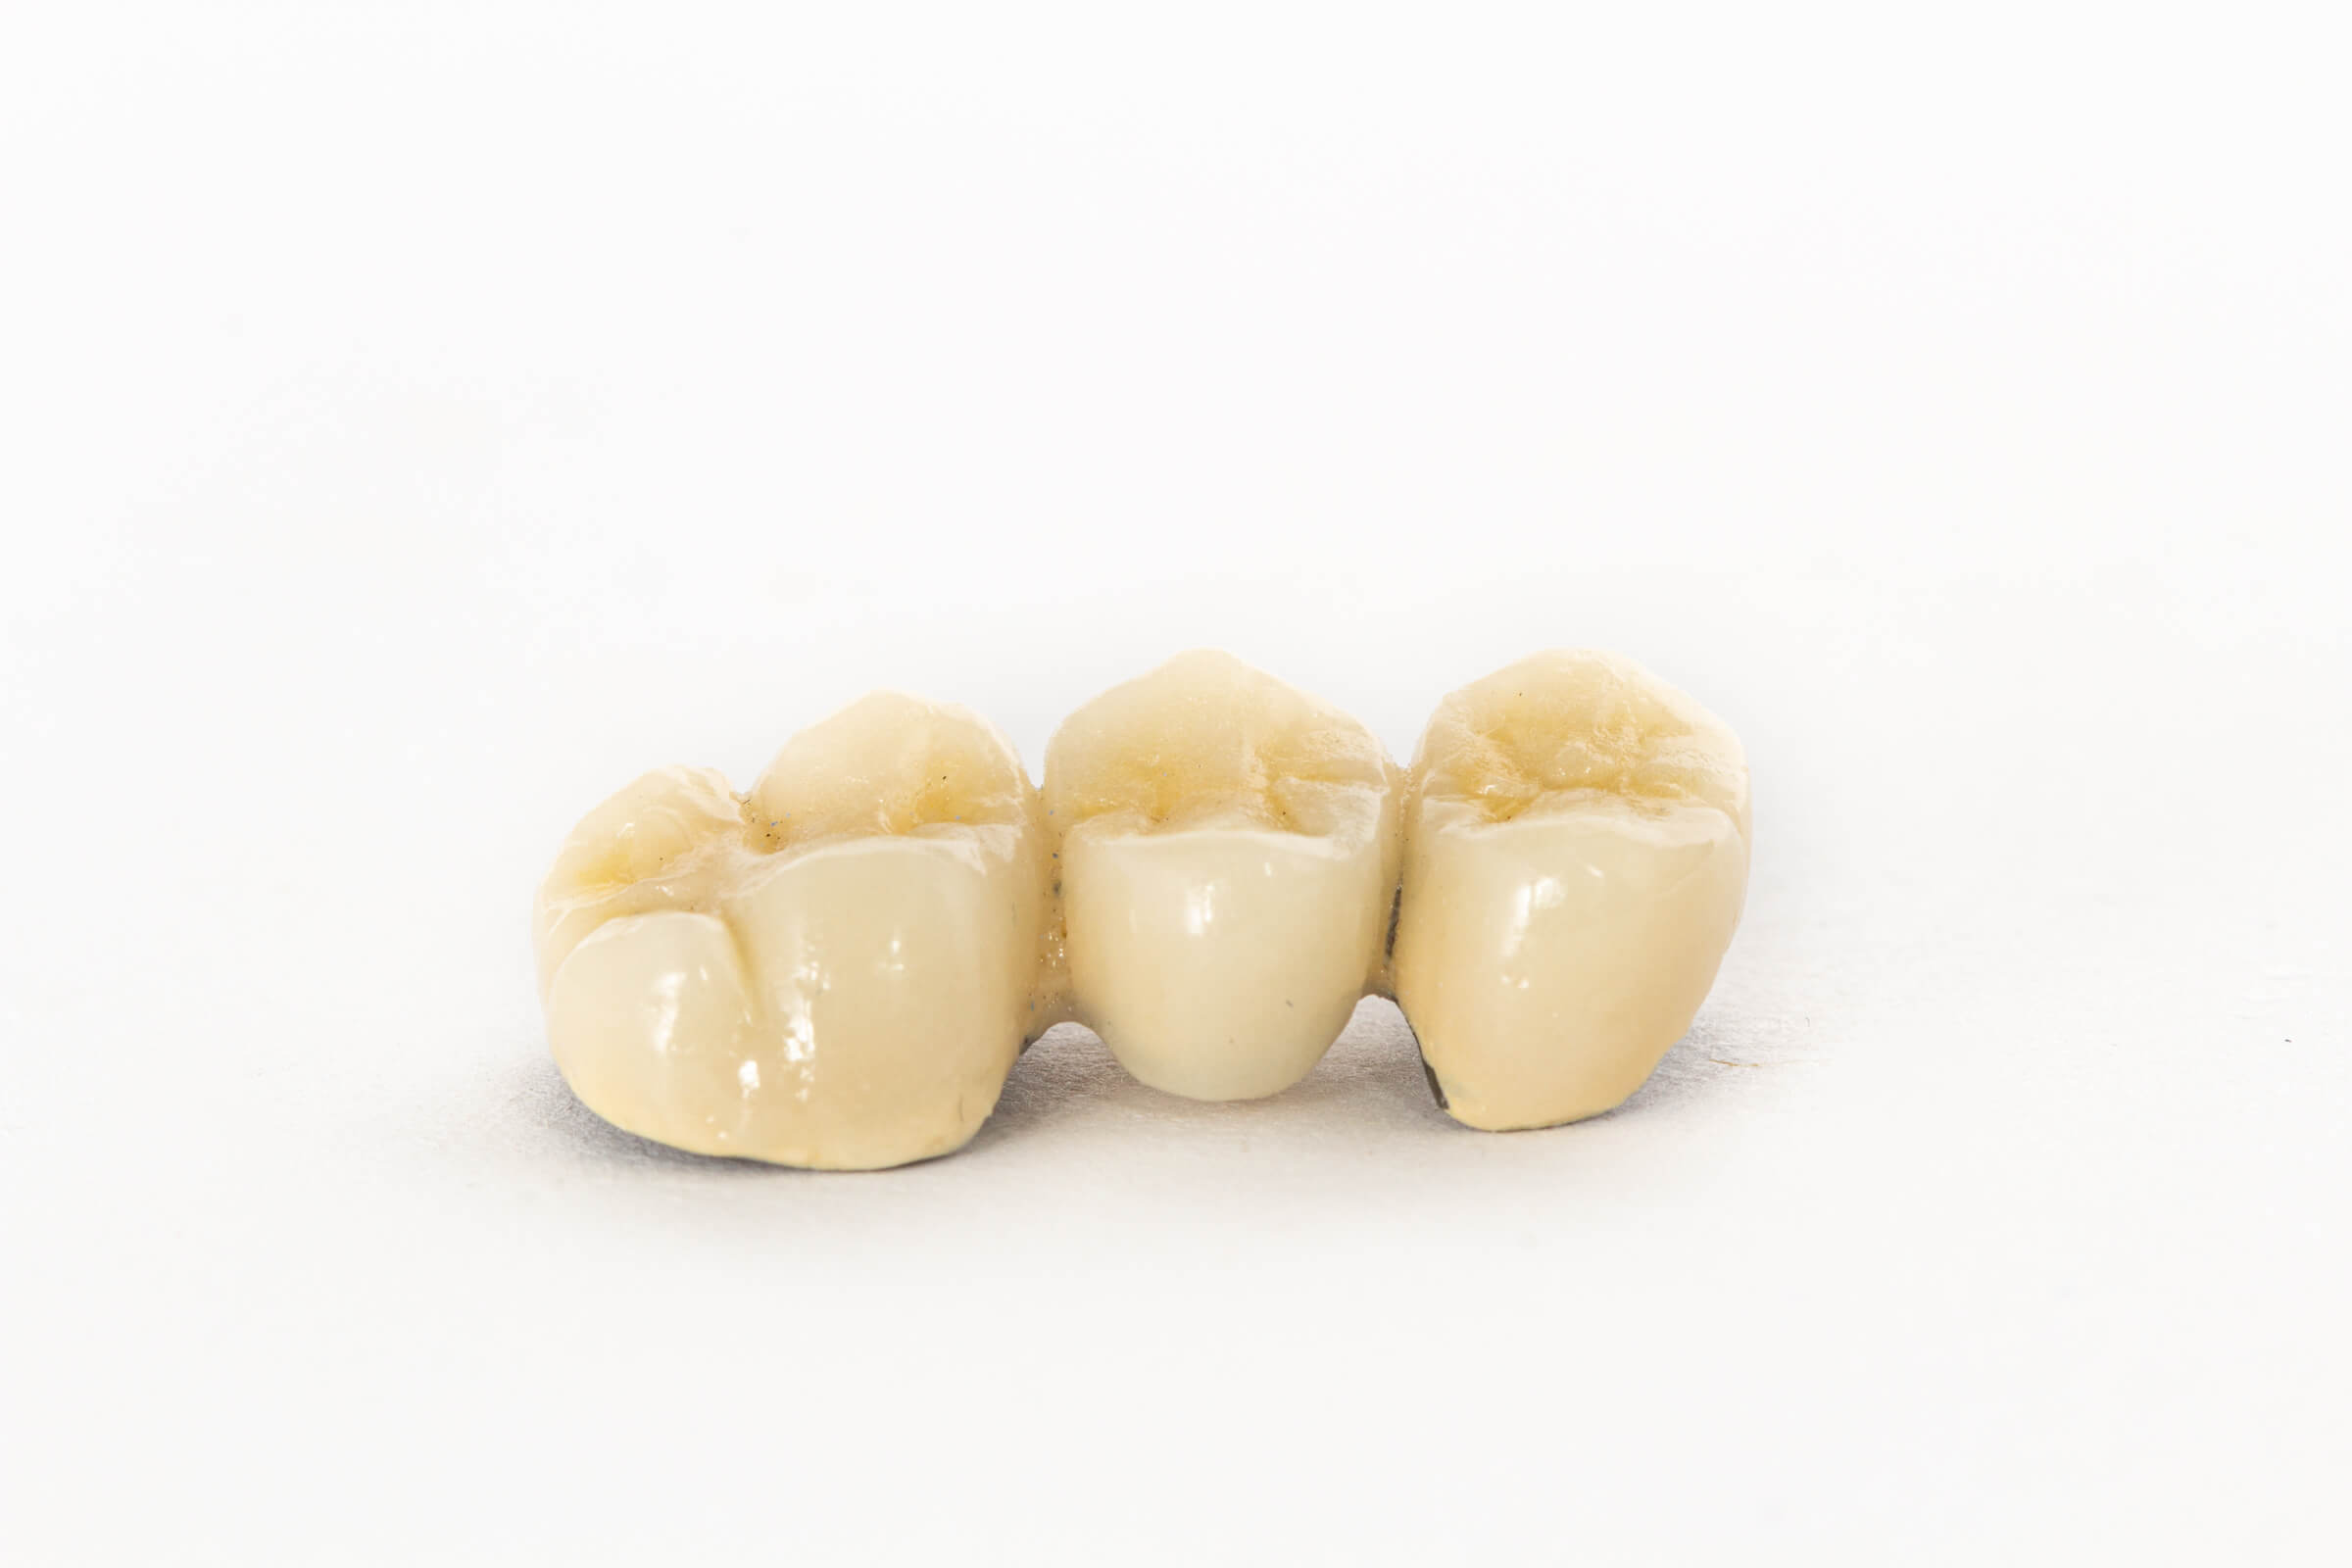 Corona dental de metal (níquel-cromo) –